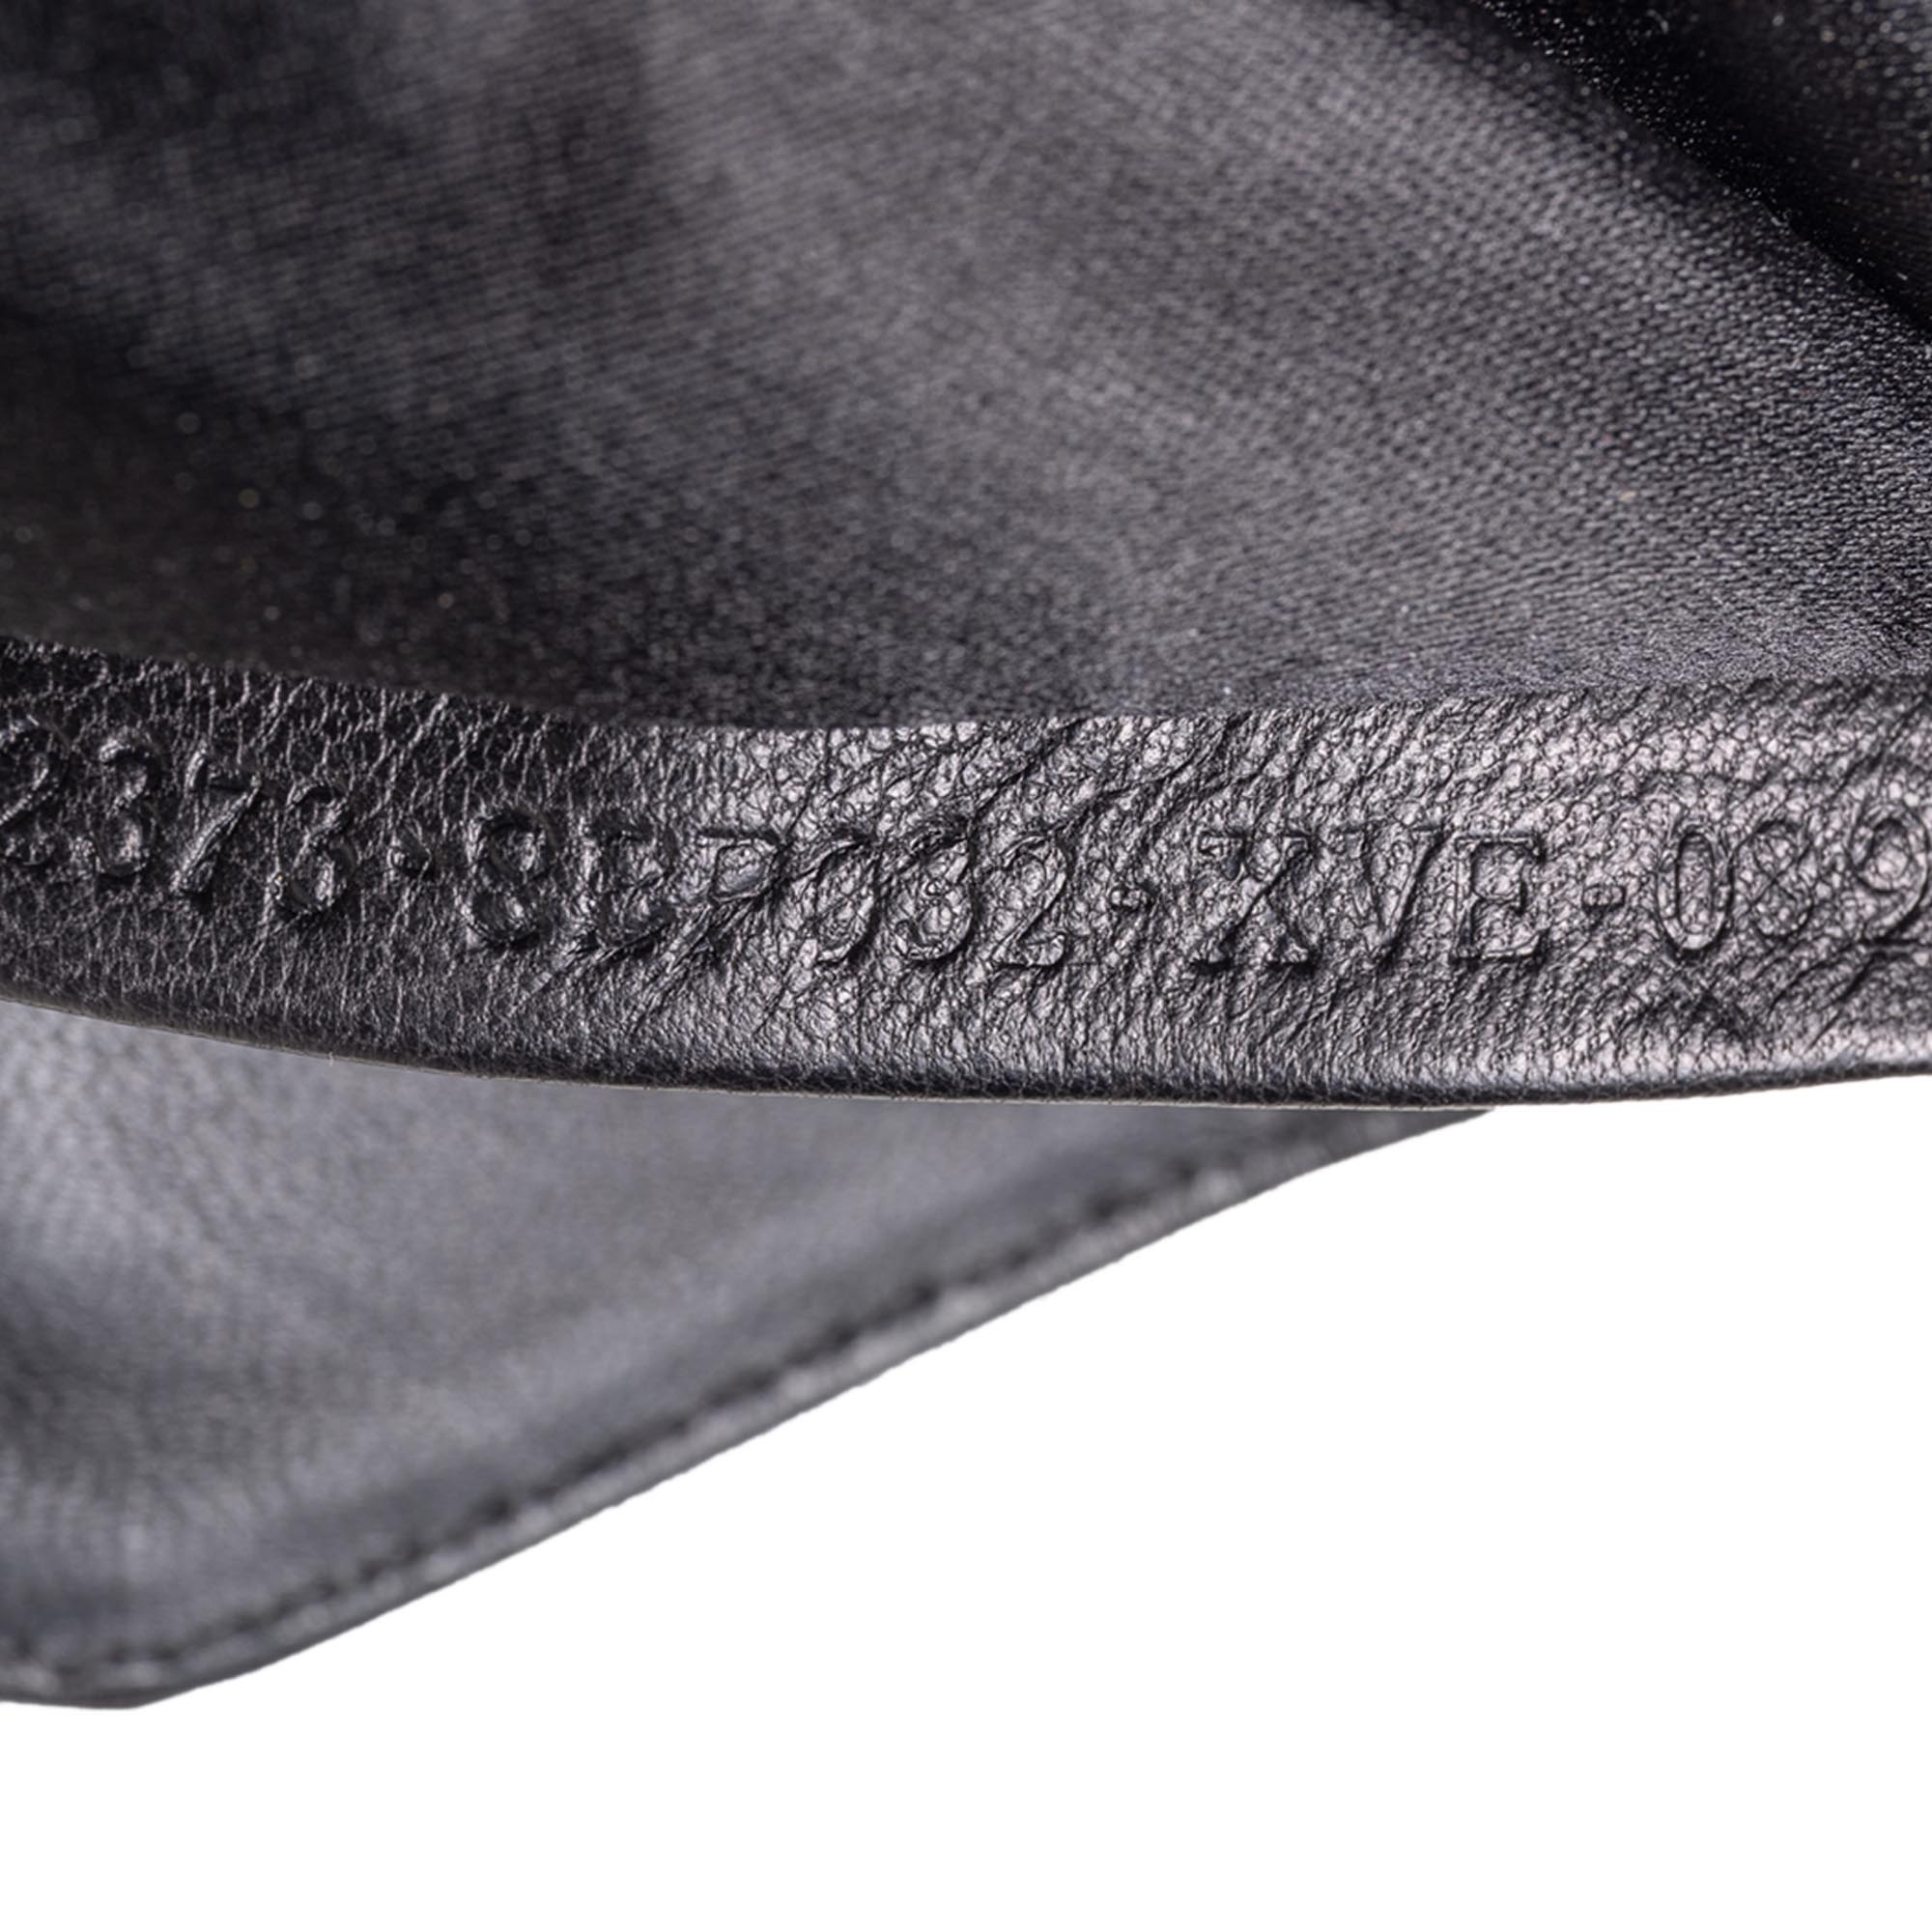 Fendi Leather Clutch Bag - Image 8 of 11